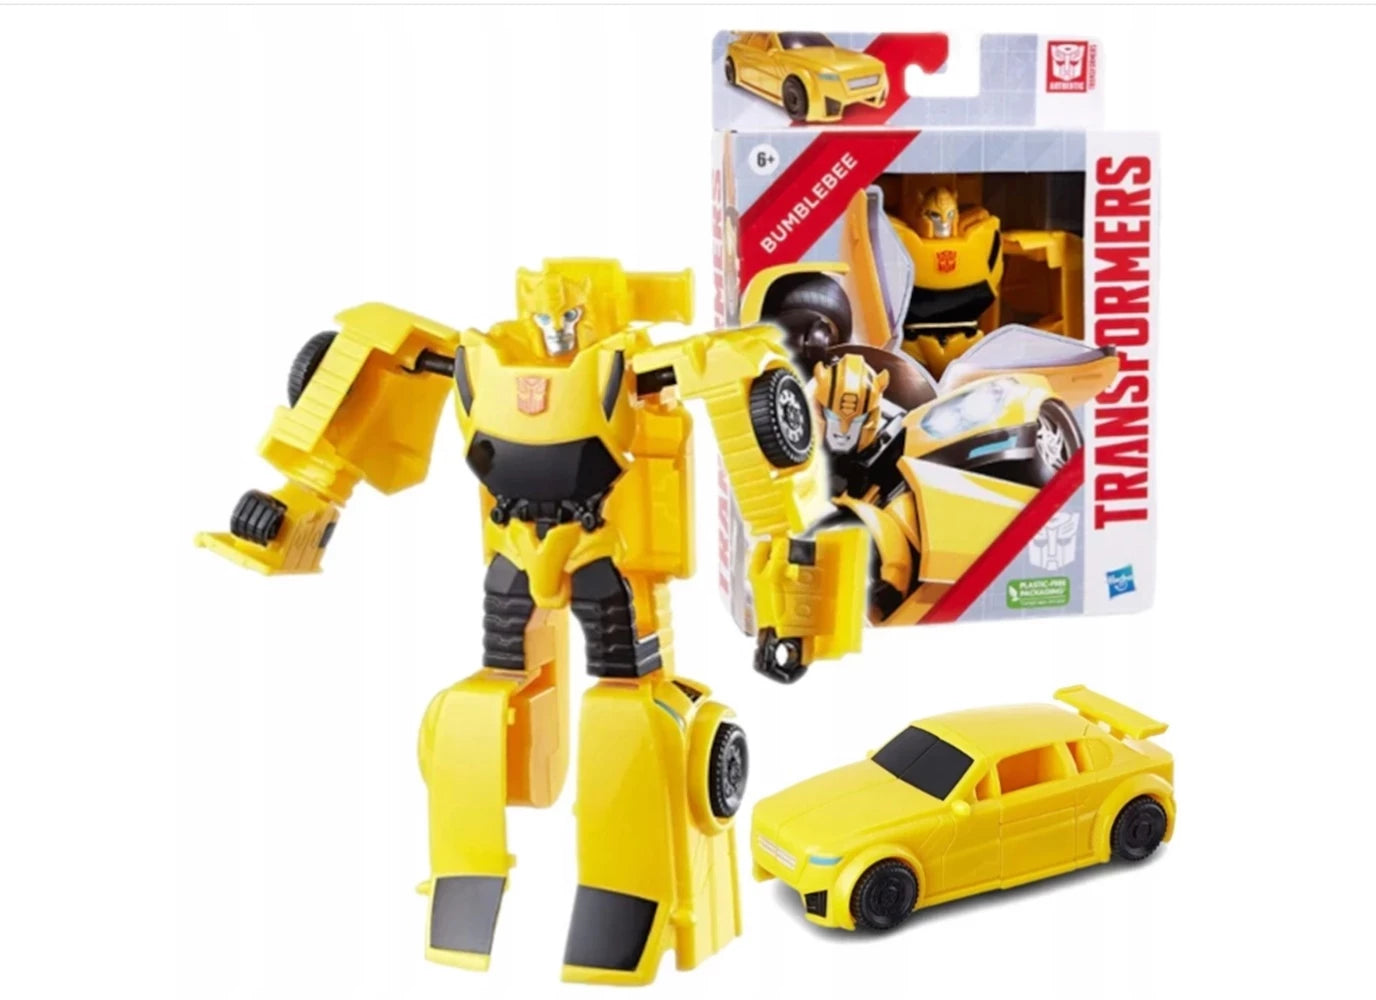 Hasbro Transformers Bumblebee Toys Titan Action Figure